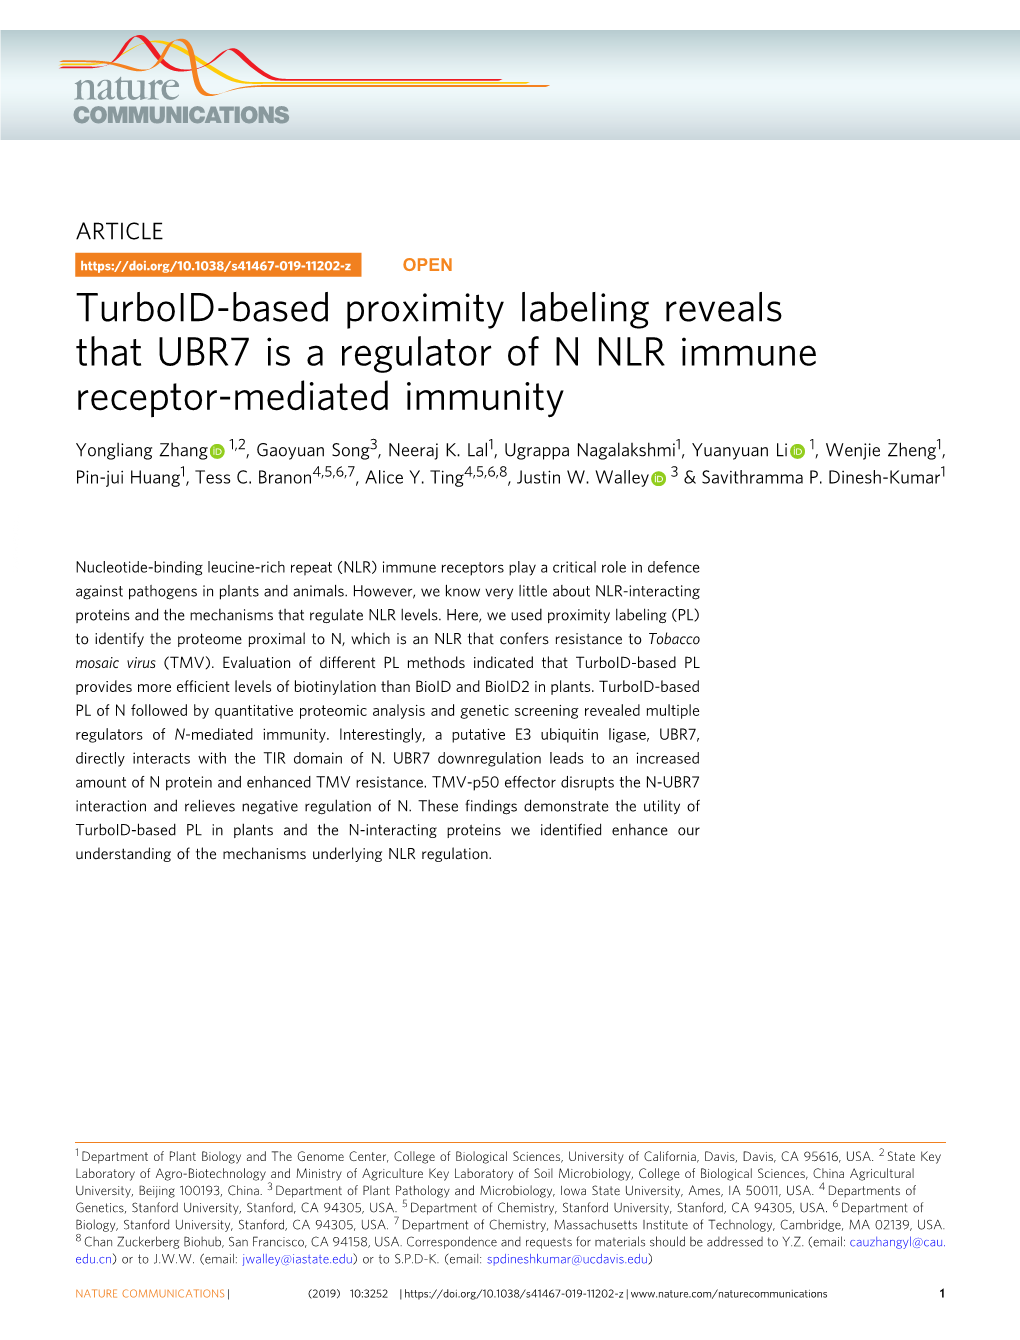 Turboid-Based Proximity Labeling Reveals That UBR7 Is a Regulator of N NLR Immune Receptor-Mediated Immunity